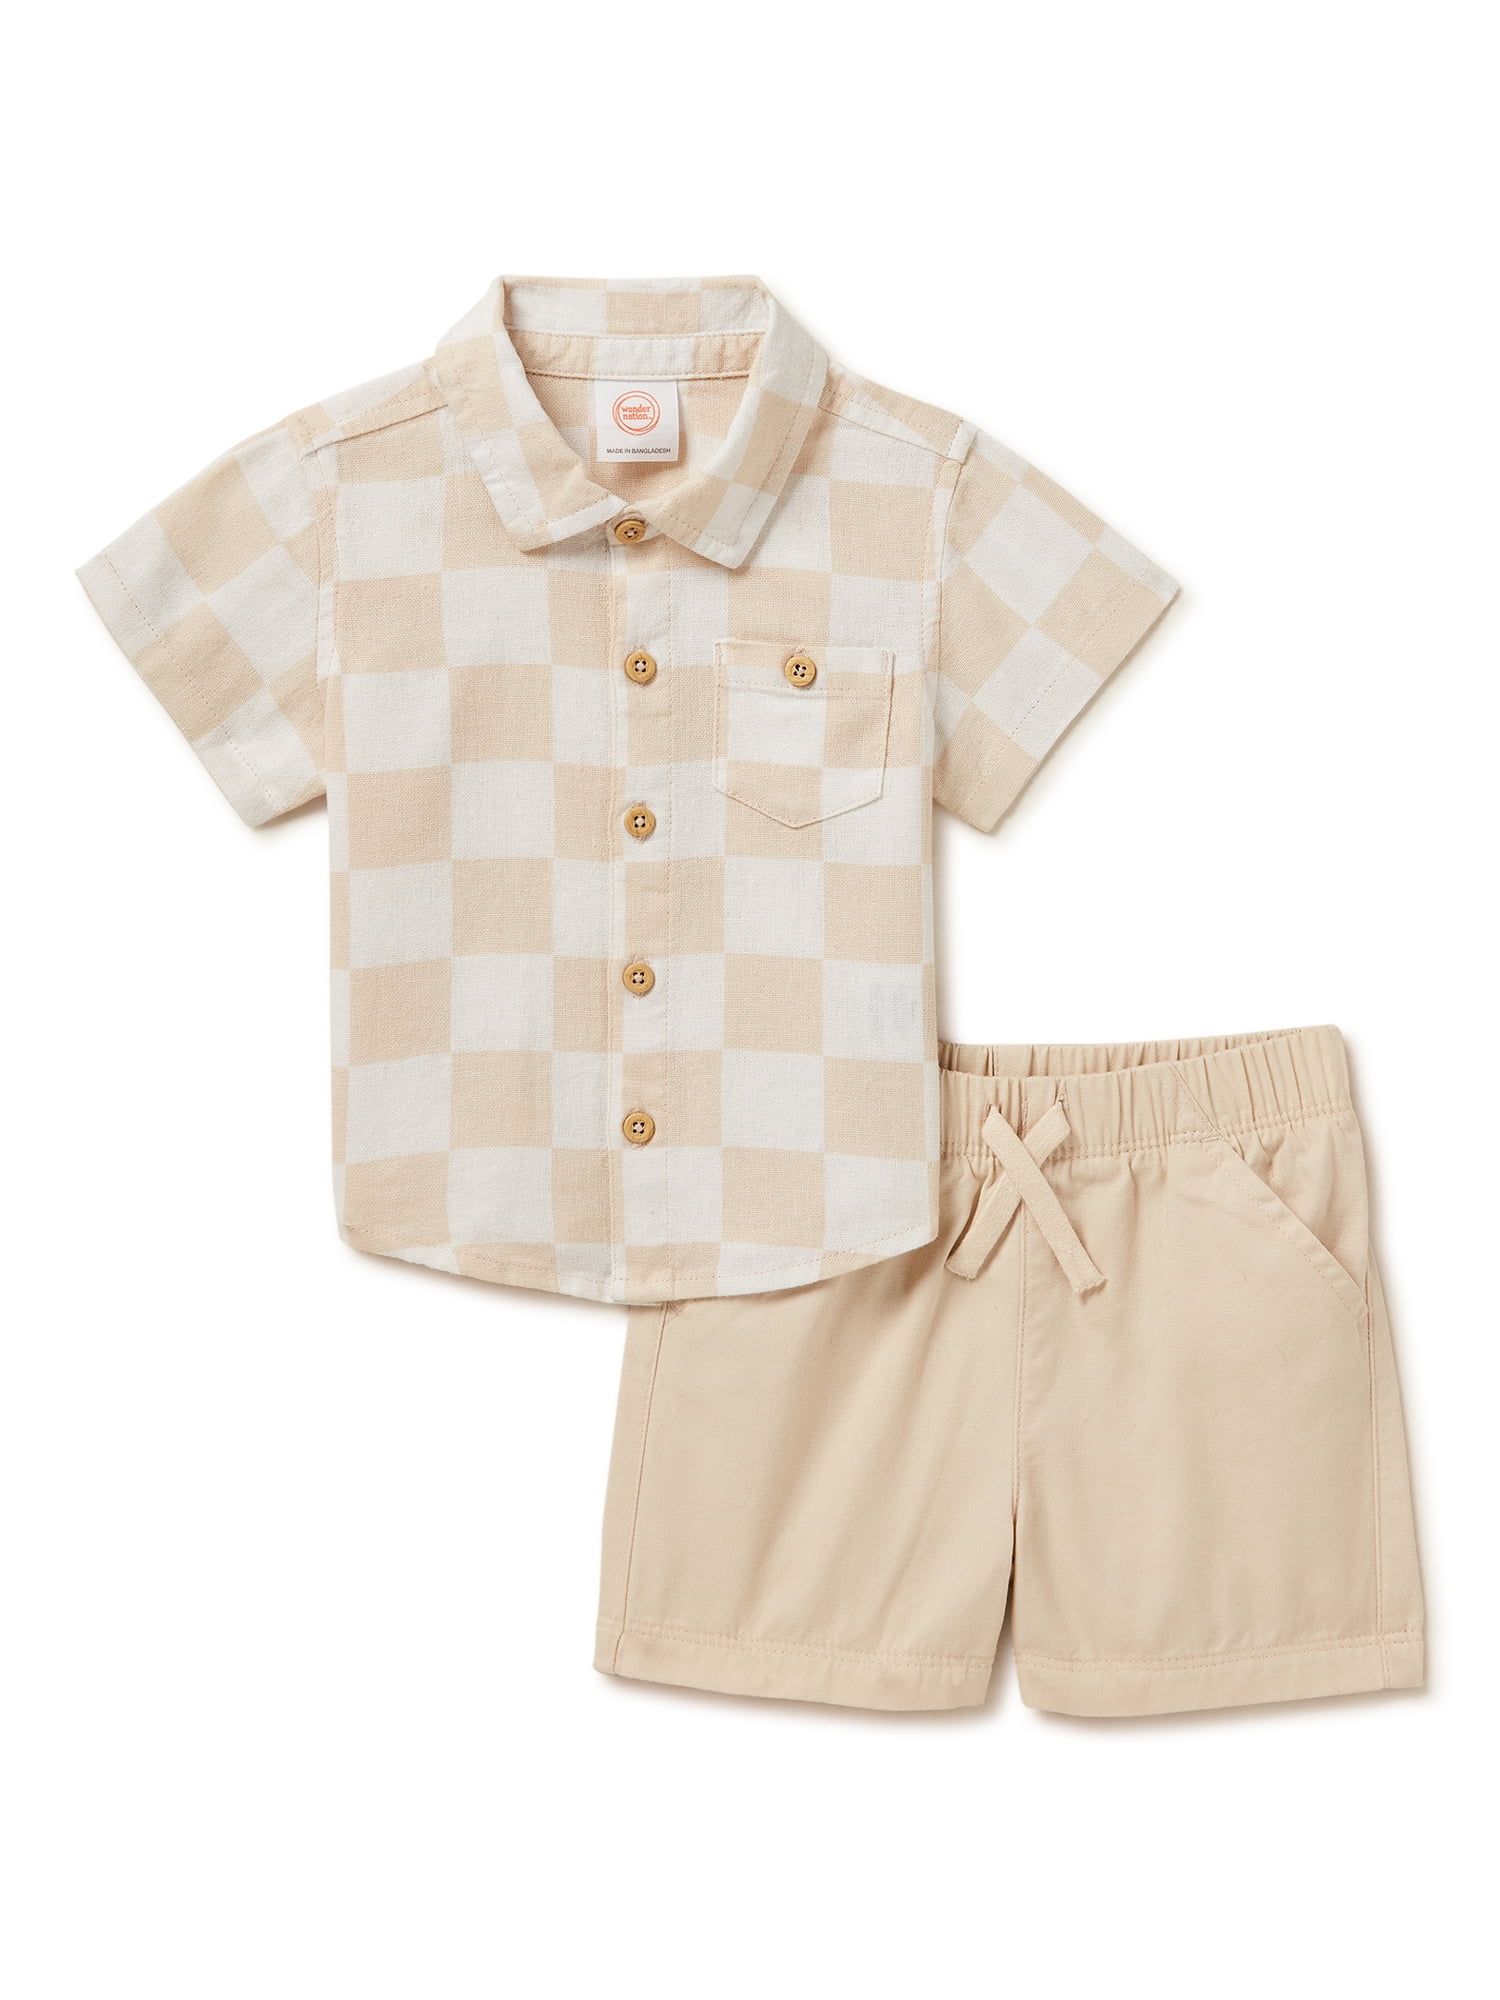 Wonder Nation Baby Boys Checkered Button Down Shirt and Shorts, 2-Piece Resort Set, Sizes 0-24 Months